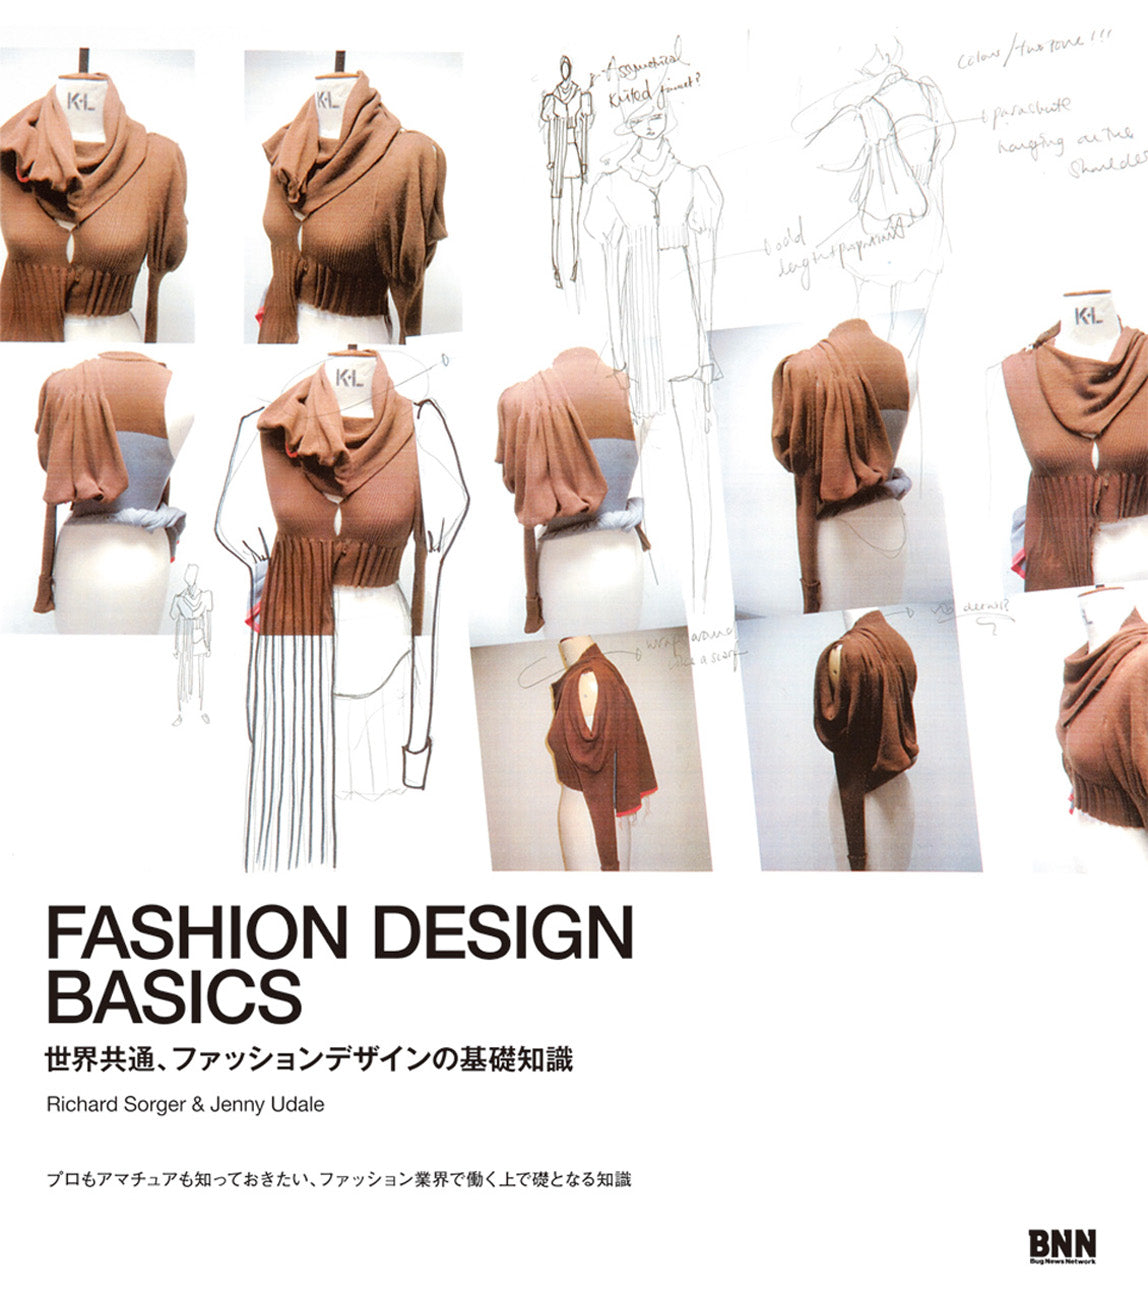 FASHION DESIGN BASICS 世界共通、ファッションデザインの基礎知識 | 株式会社ビー・エヌ・エヌ